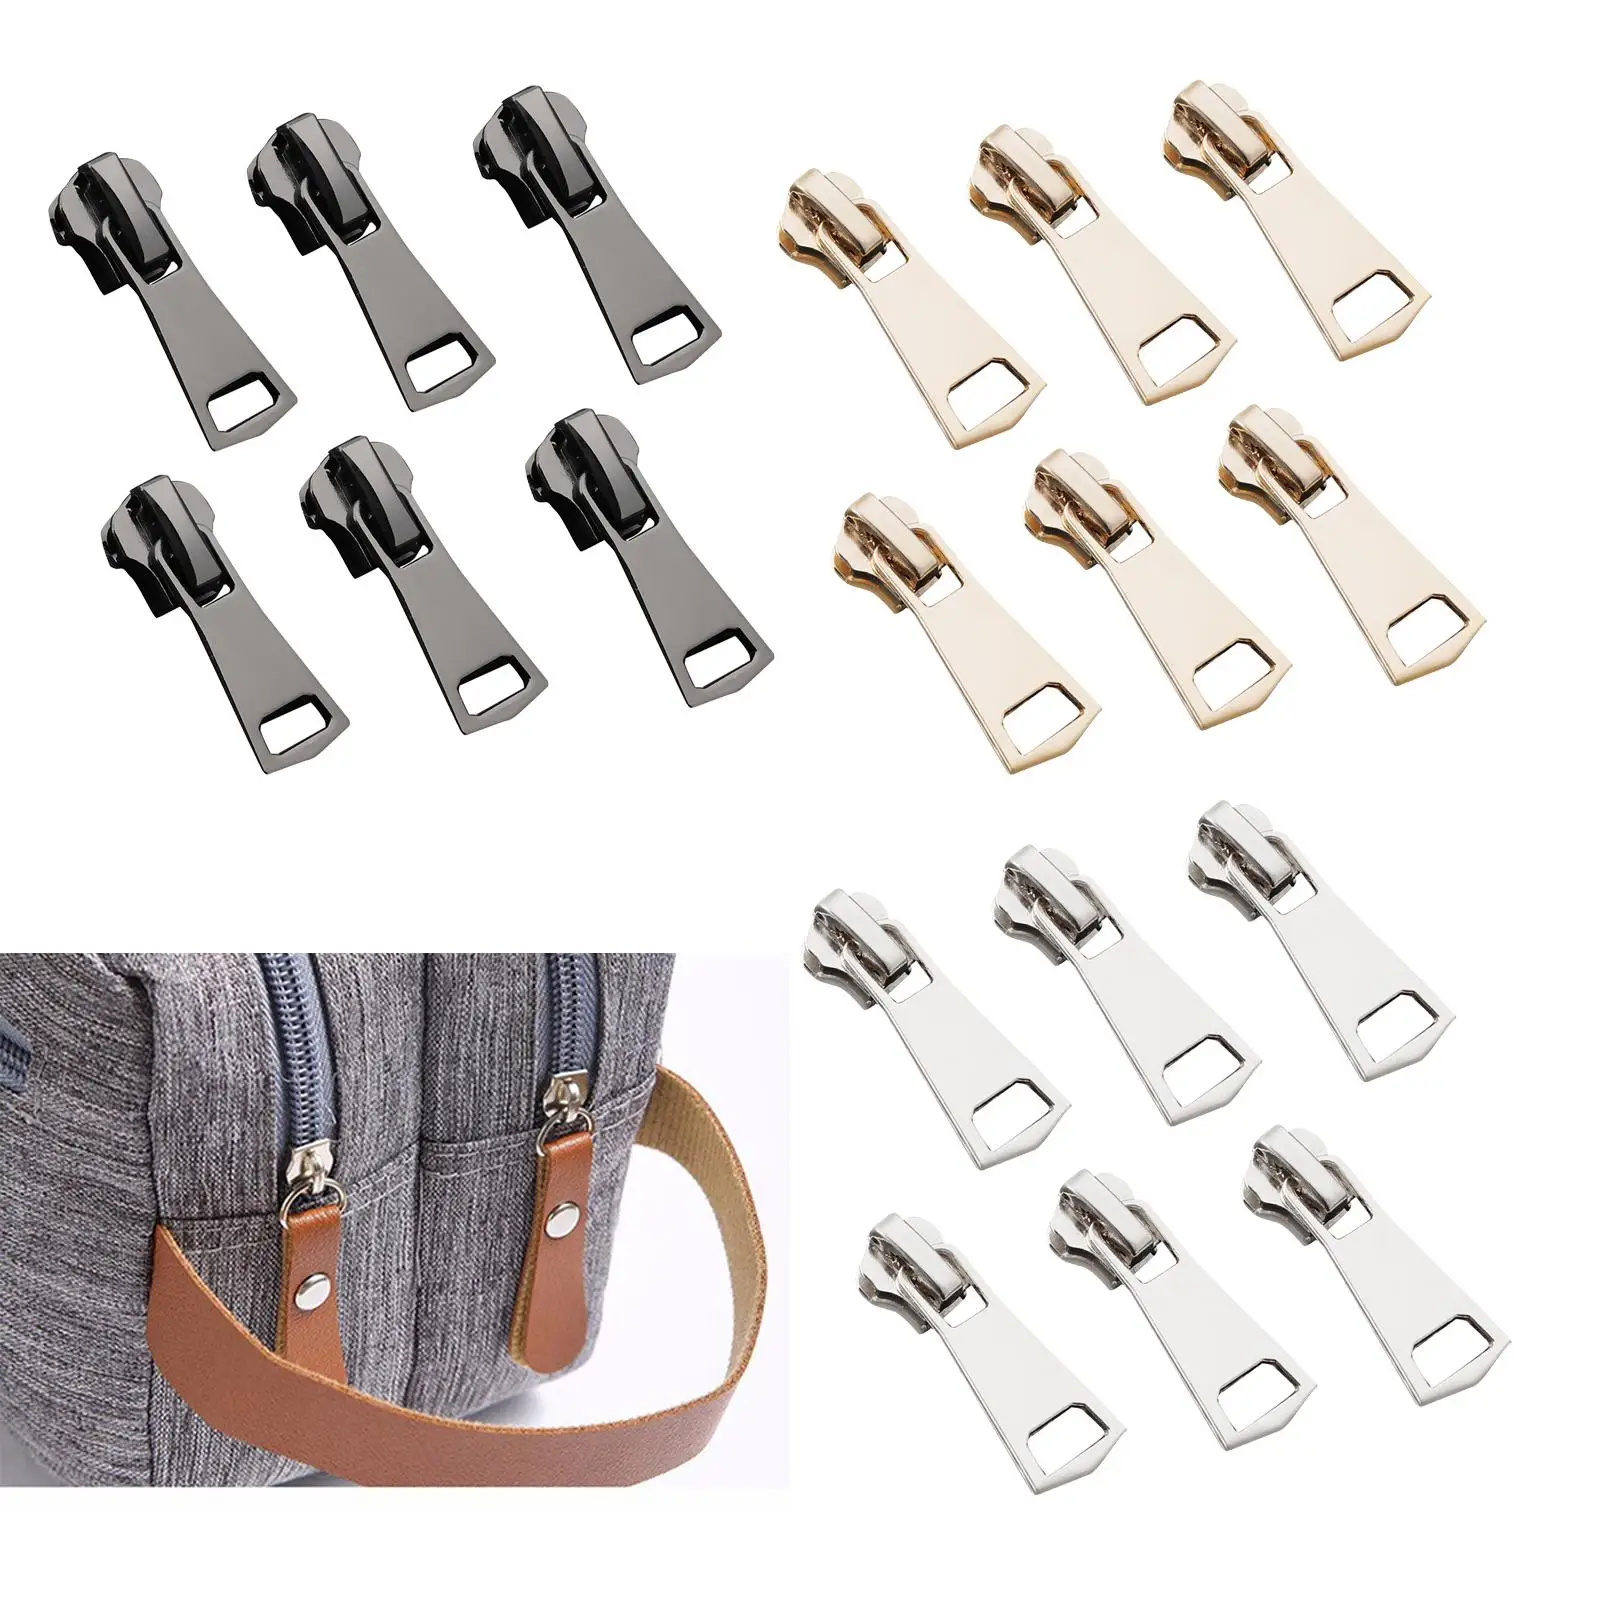 6Pcs Metal Universal Zipper Repair Kit Instant Zipper Pull Zip Slider Antirust Sewing Clothes for Repairing Coats Sleeping Bag